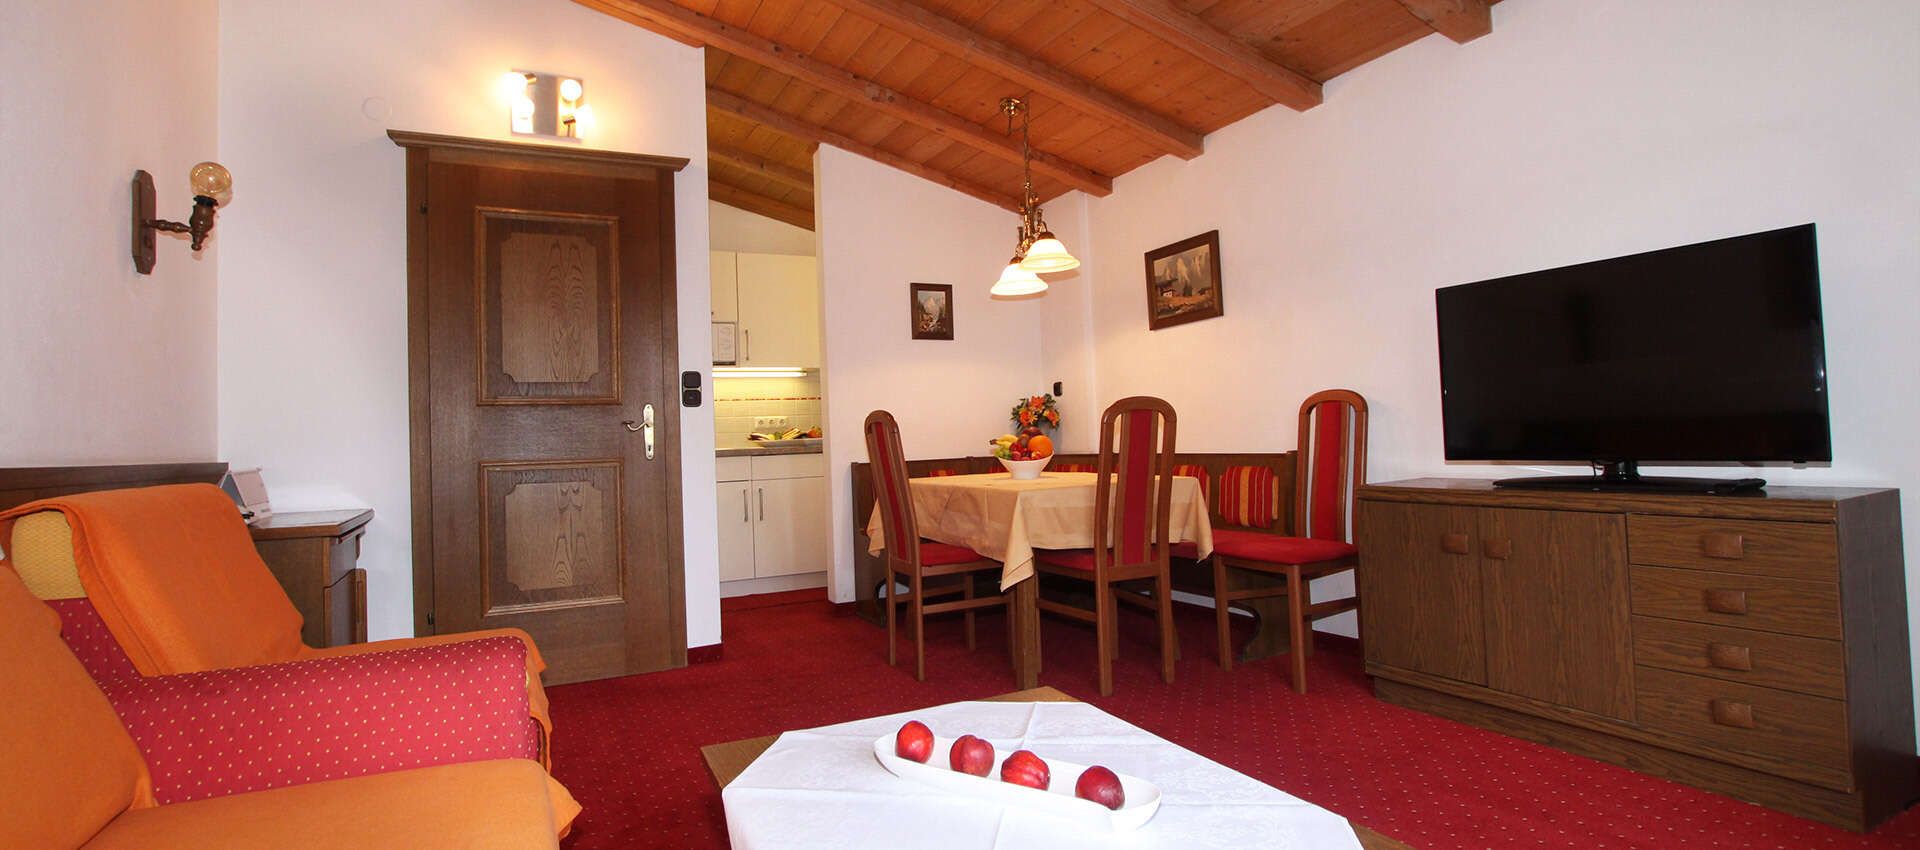 Apartments Rössl for 2-5 people in the Kitzbühel Alps in Tyrol